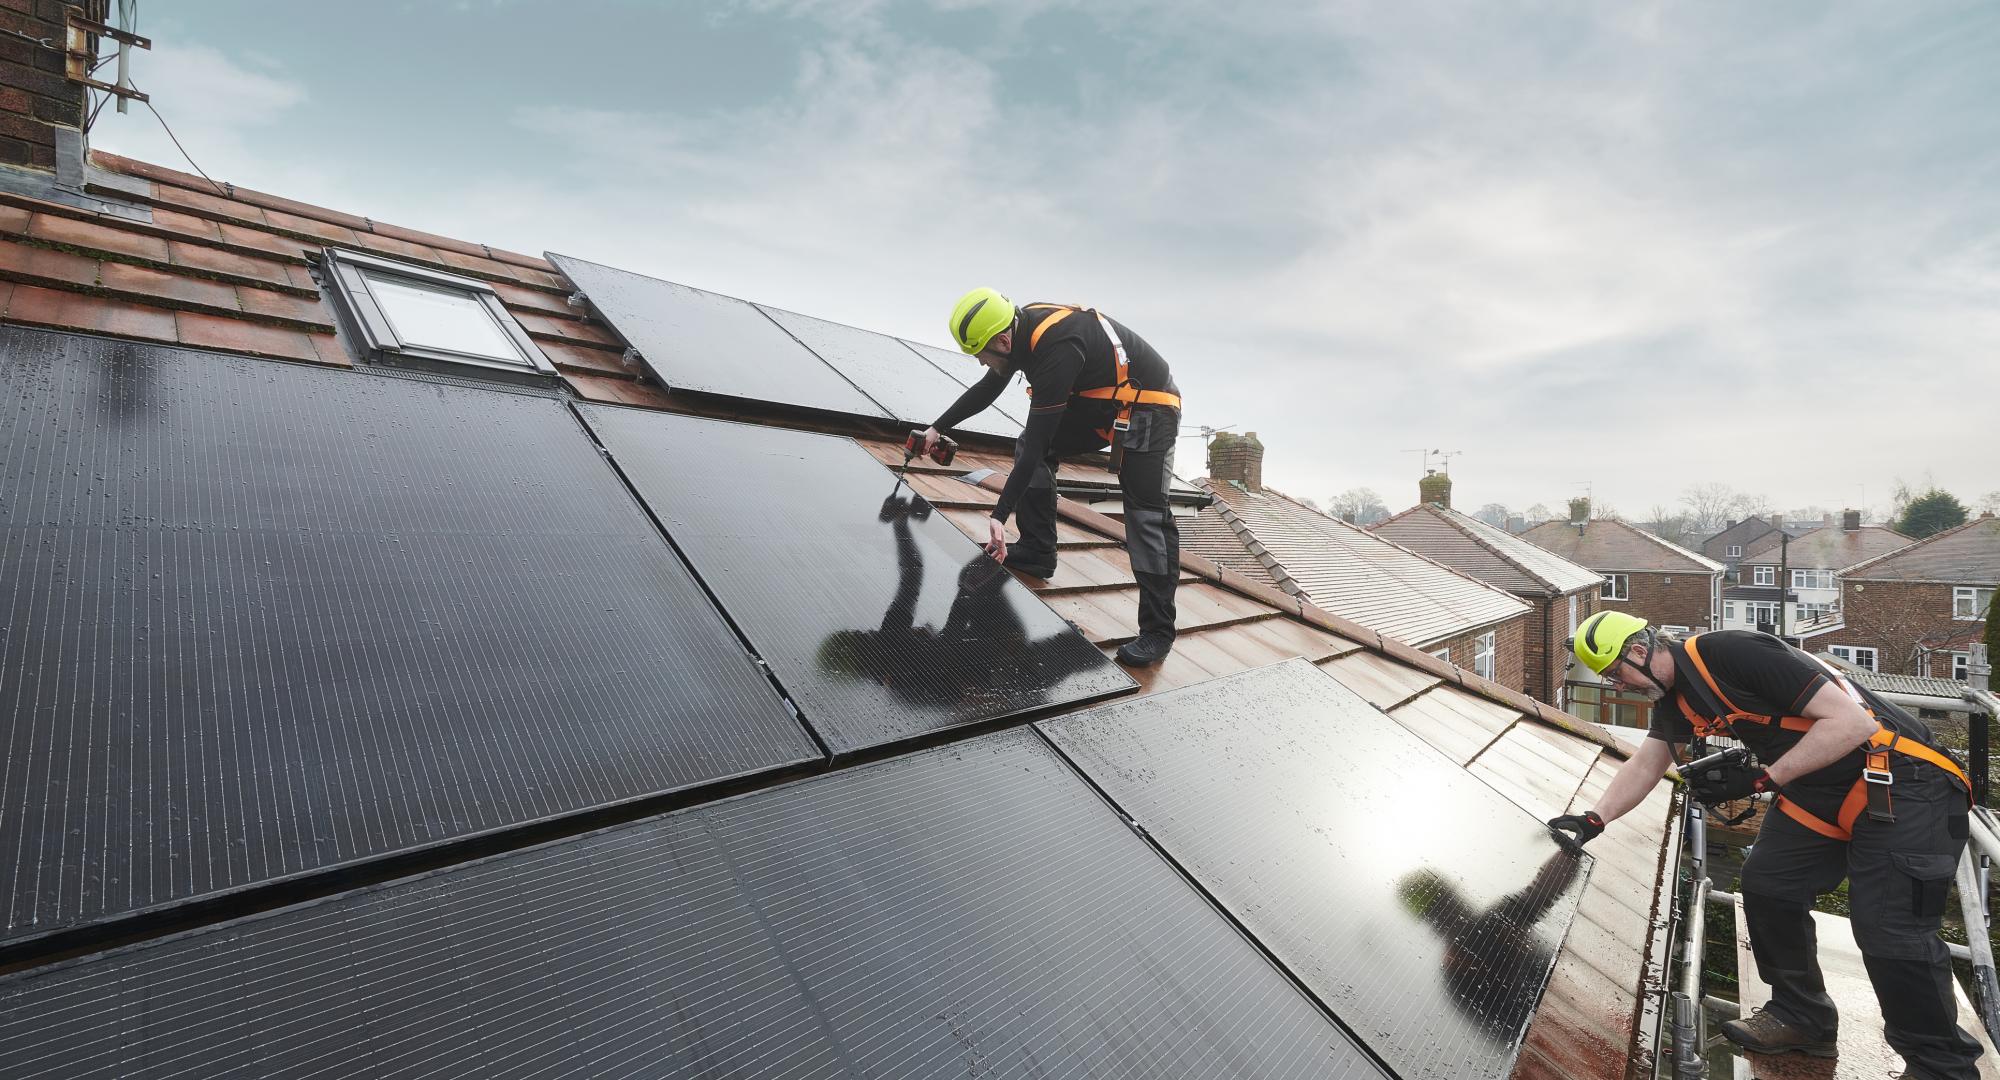 Men installing solar panels, a source of green energy